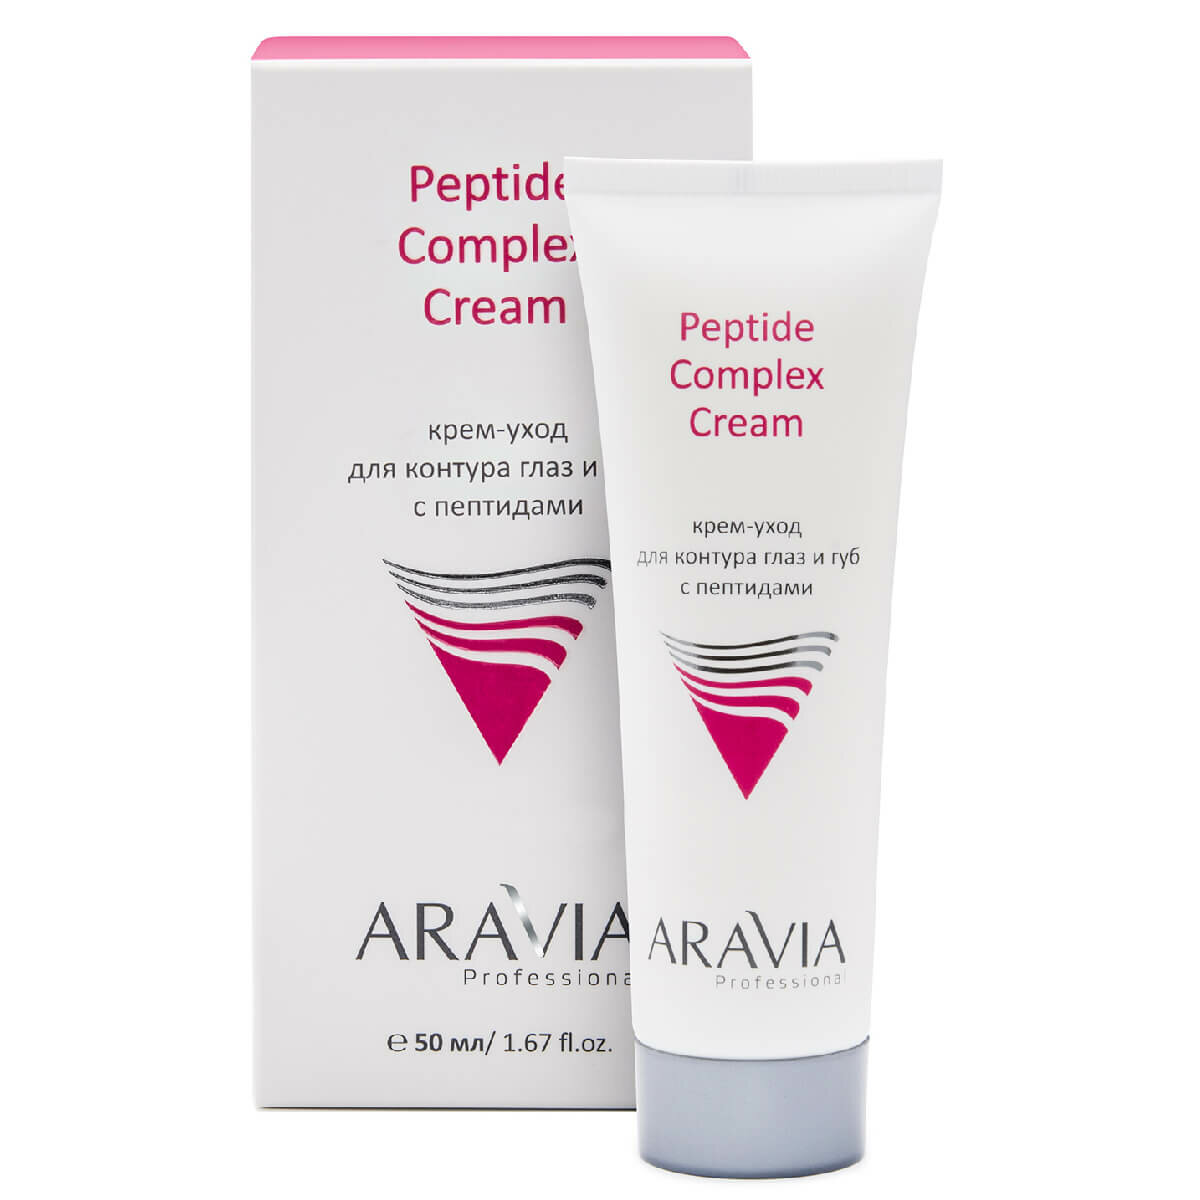 ARAVIA Professional Крем-уход для контура глаз и губ с пептидами Peptide Complex Cream, 50 мл, ARAVIA Professional